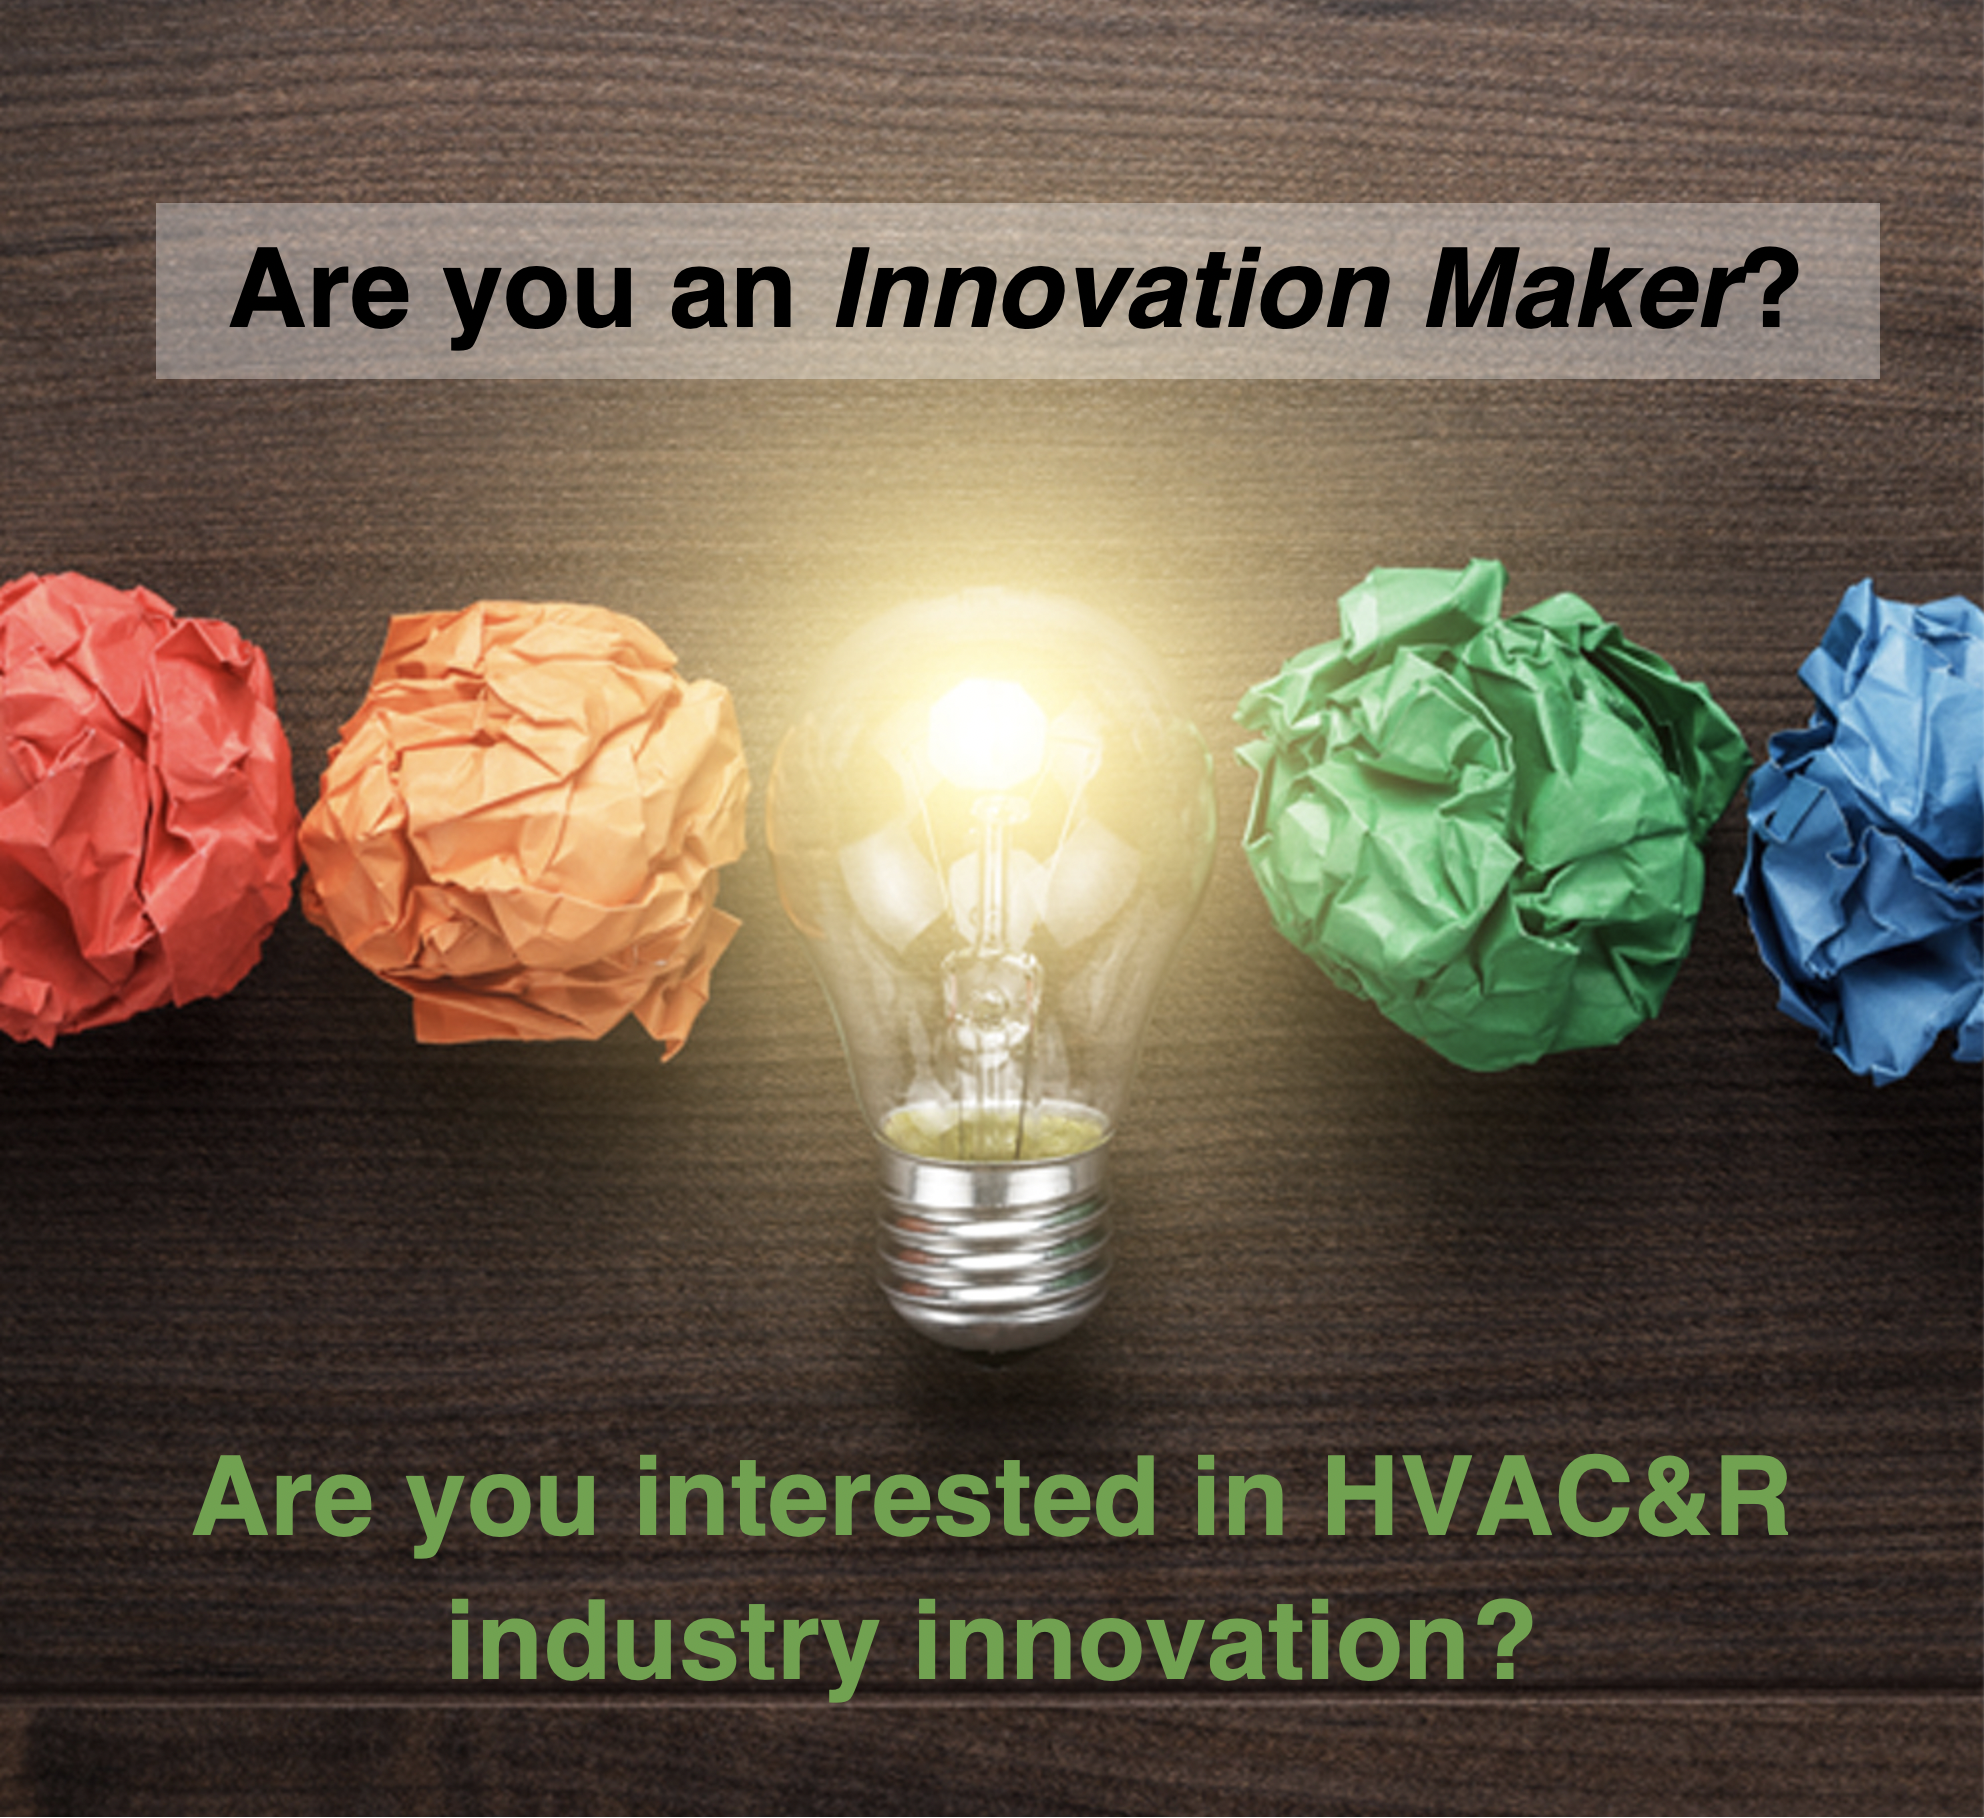 Validating Innovation | Introducing our HVAC&R Innovation Index